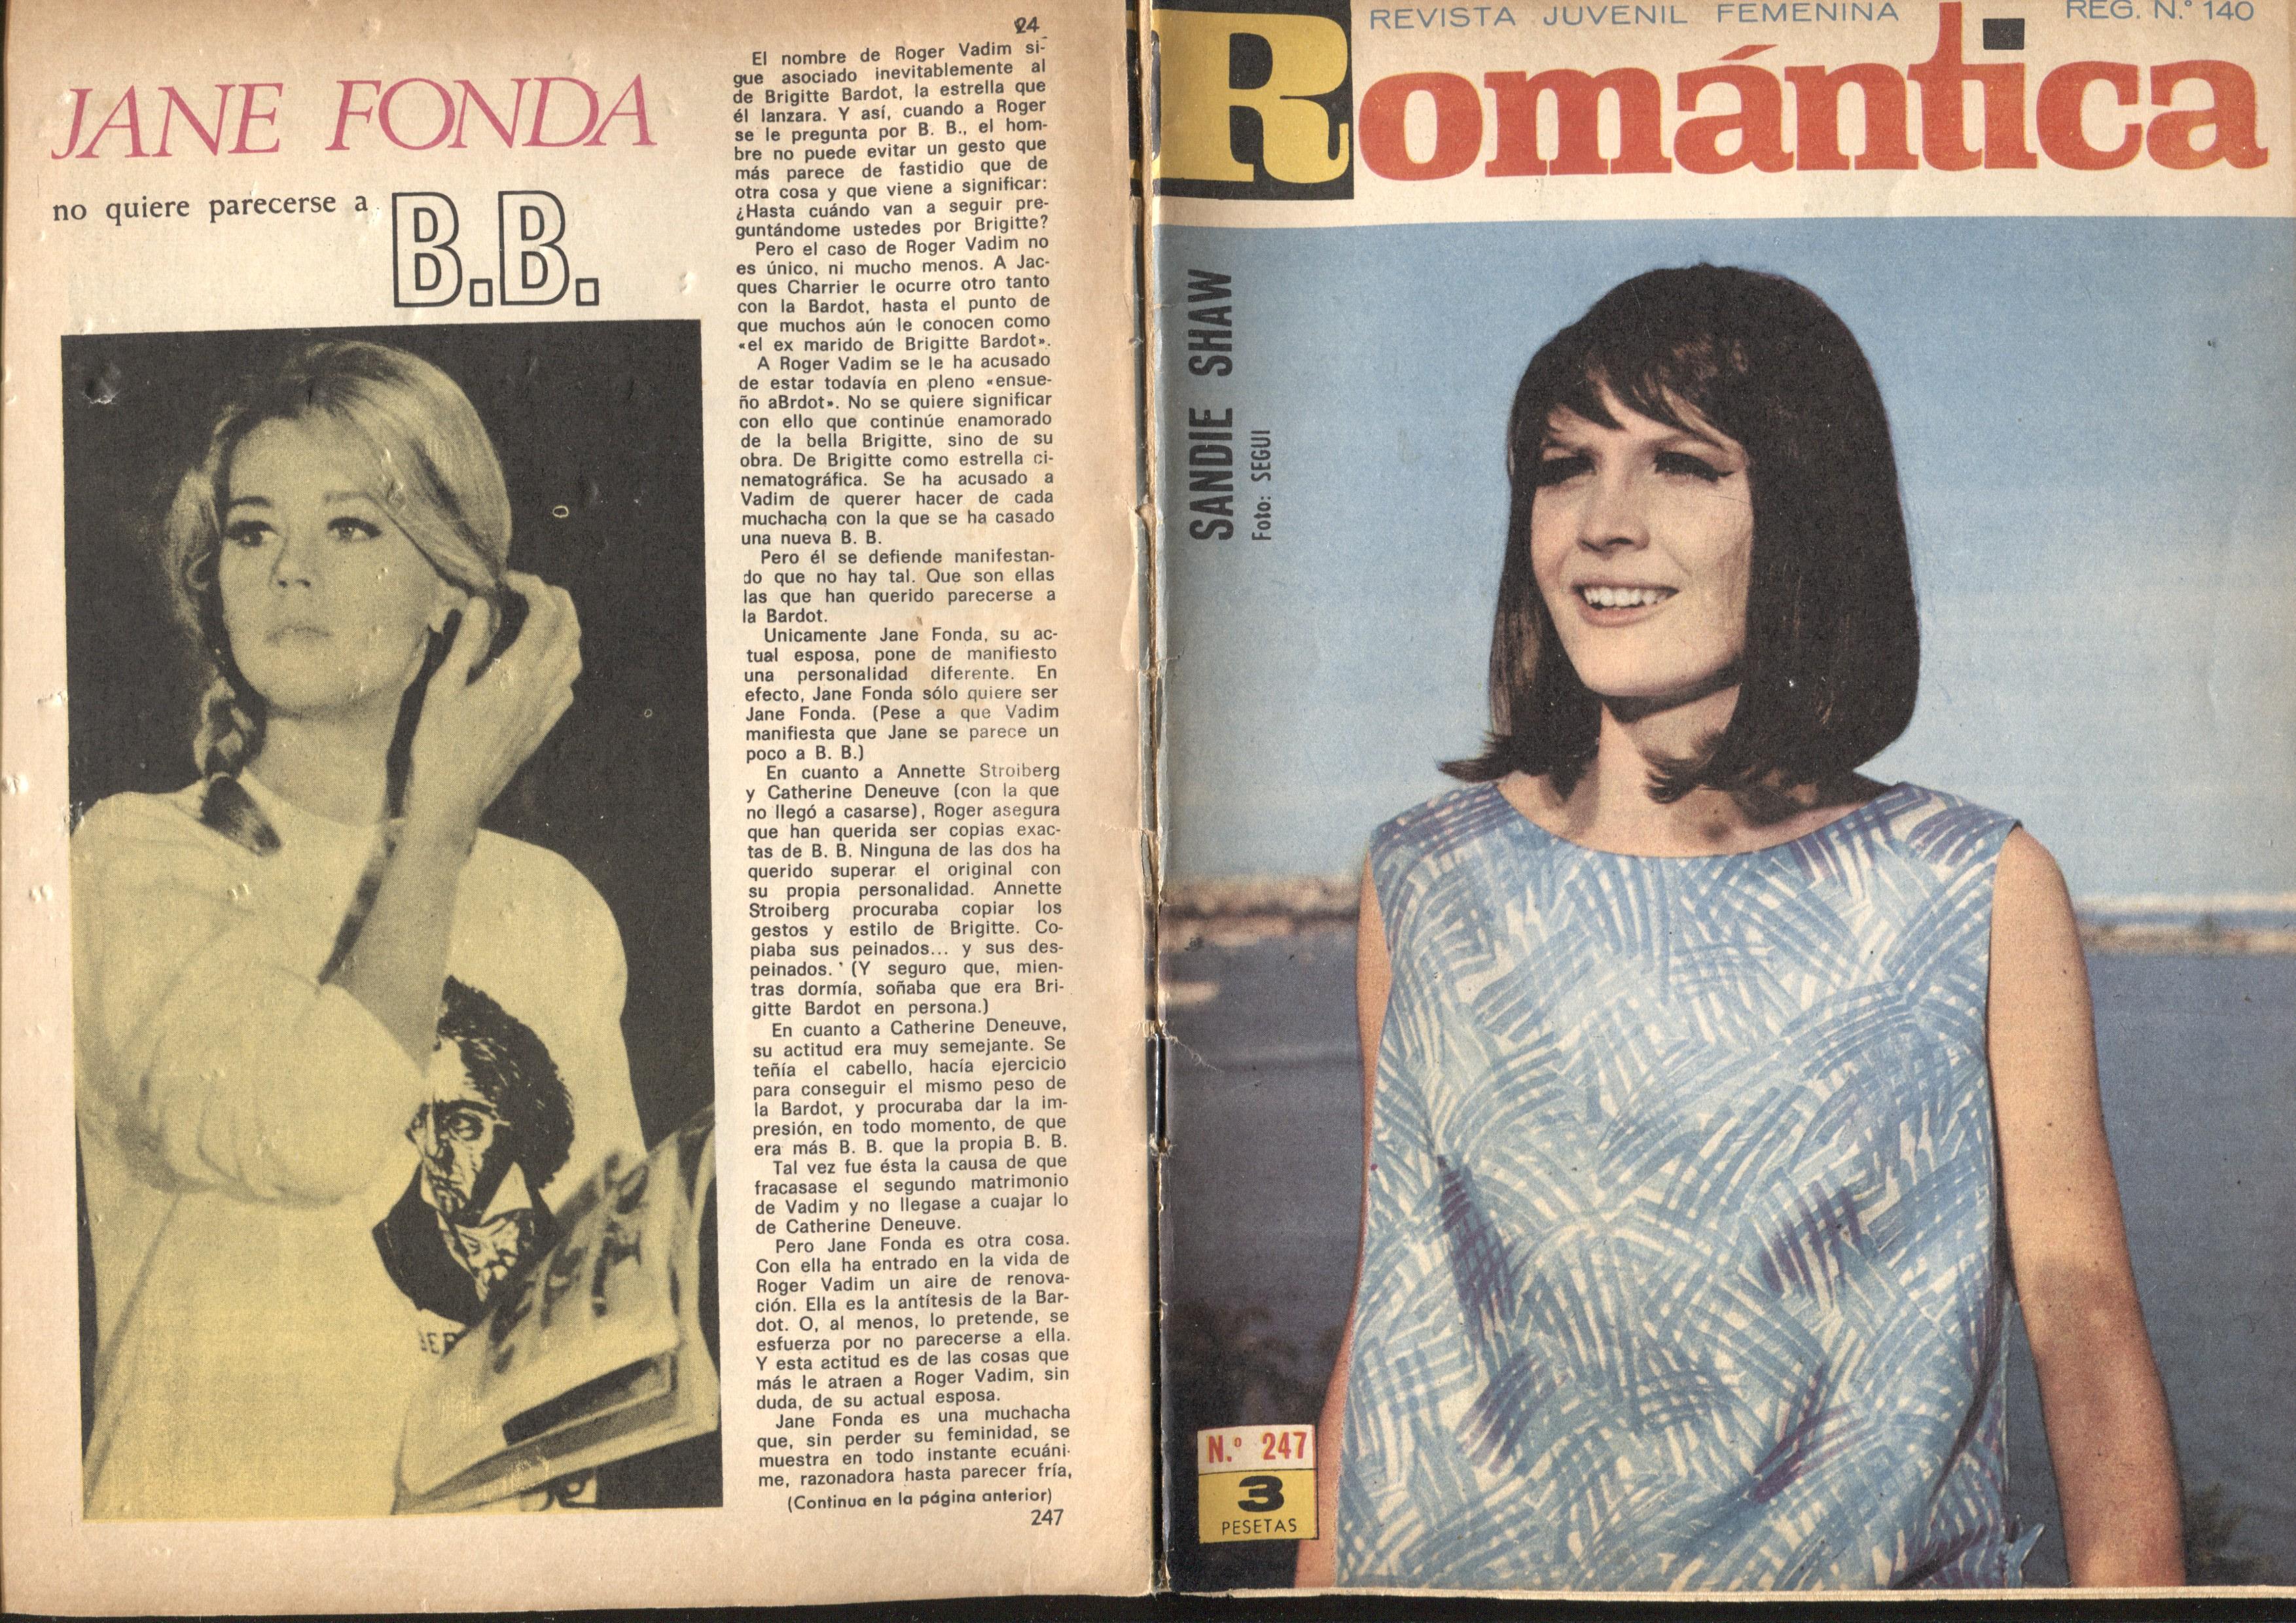 Romantica numero 247: cubierta con Sandie shaw, trasera ficha articulo sobre Jane Fonda